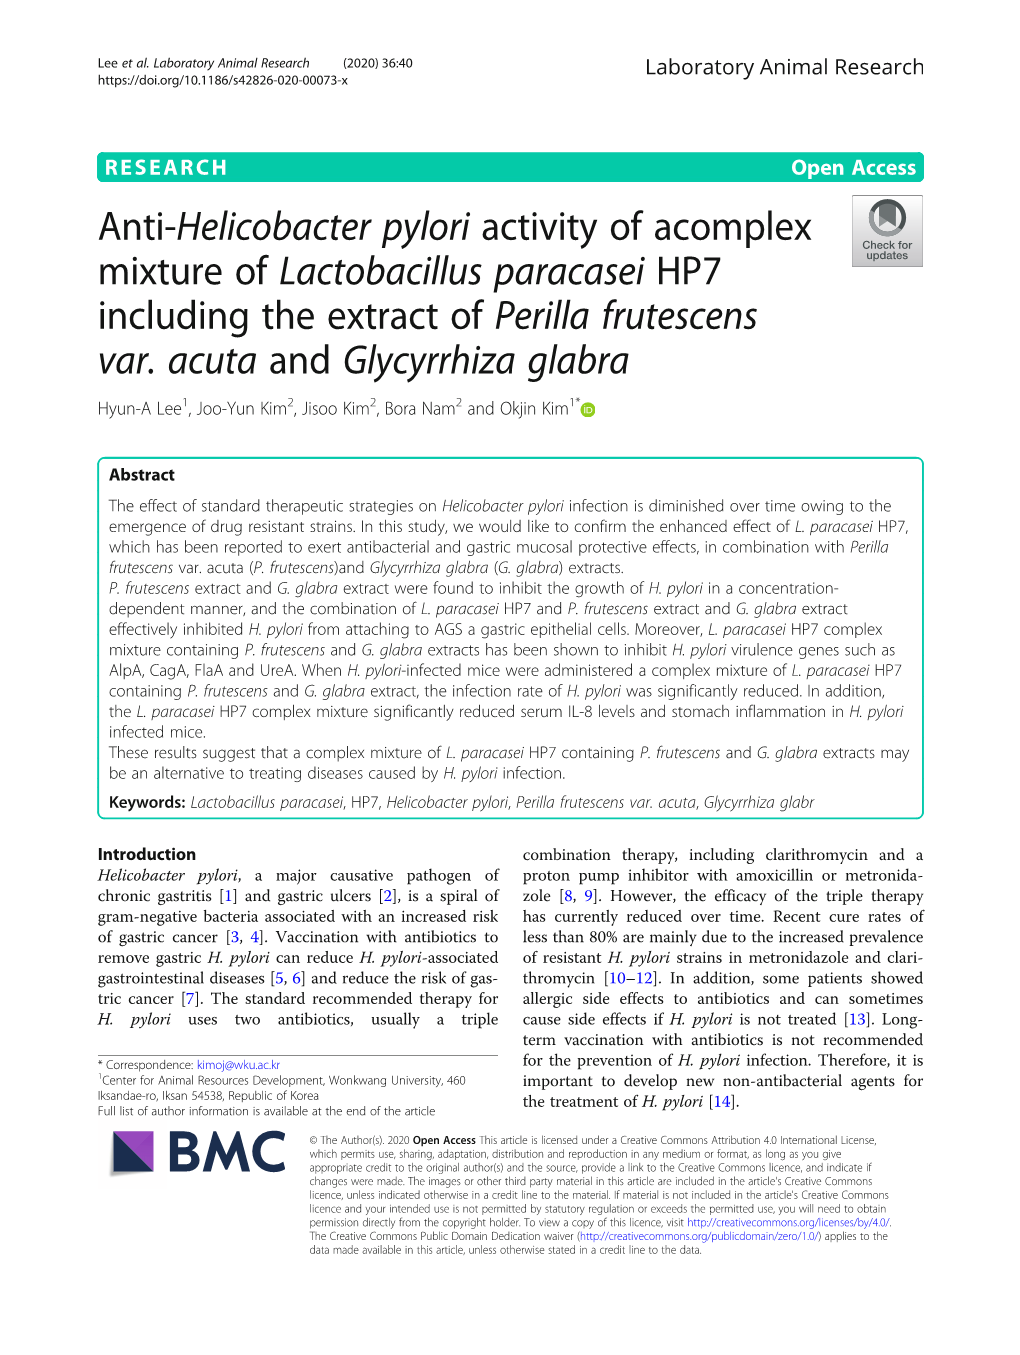 Anti-Helicobacter Pylori Activity of Acomplex Mixture of Lactobacillus Paracasei HP7 Including the Extract of Perilla Frutescens Var